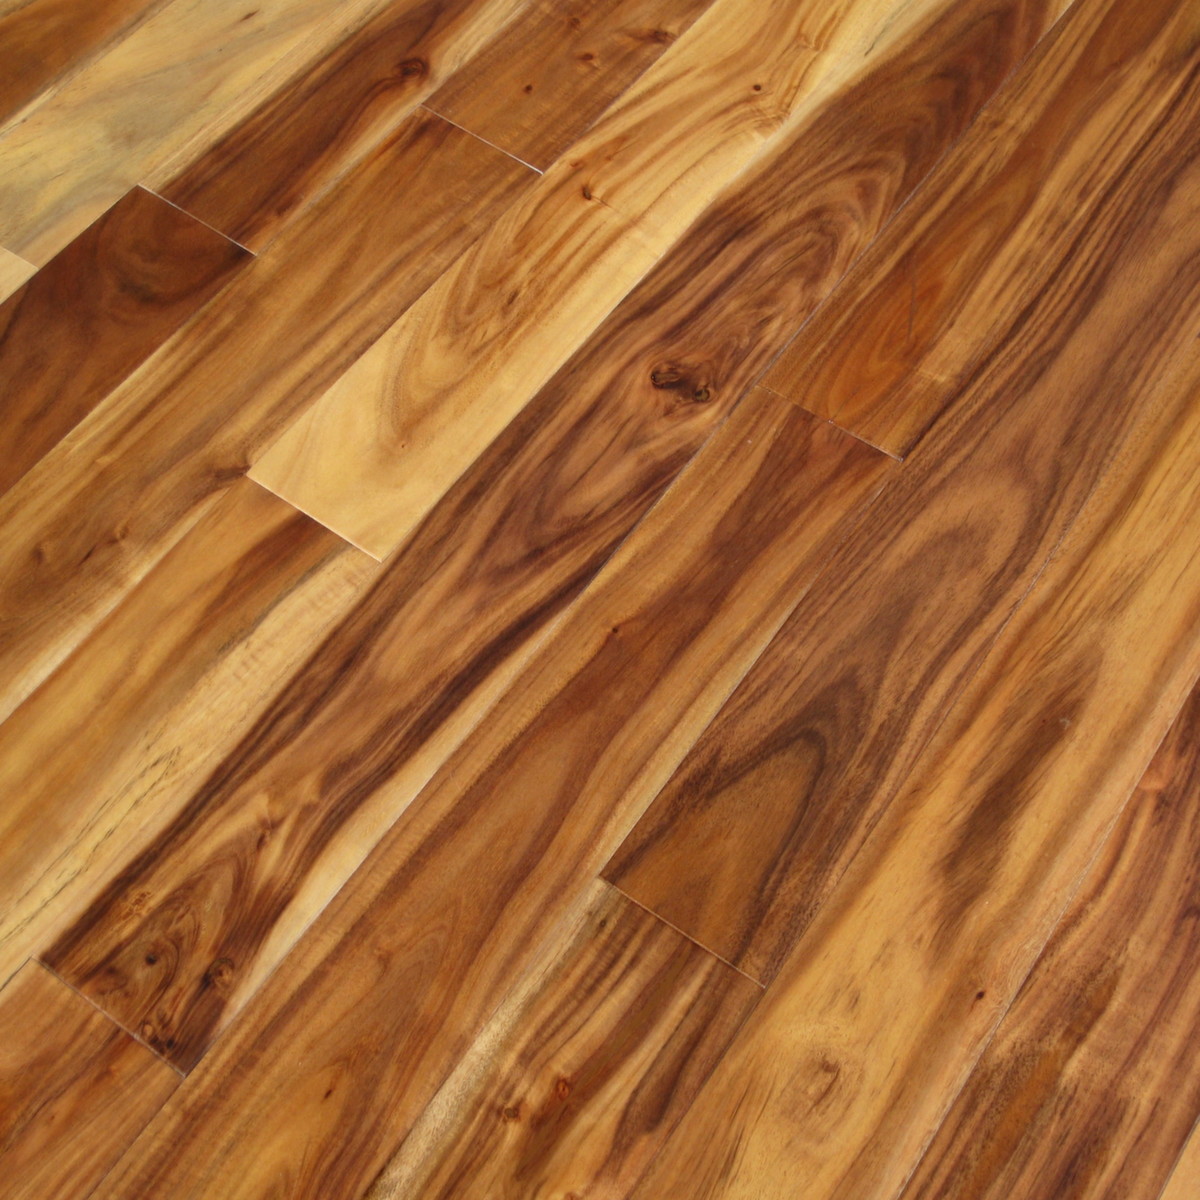 Acacia Natural Plank Hardwood Flooring Unique Wood Floors